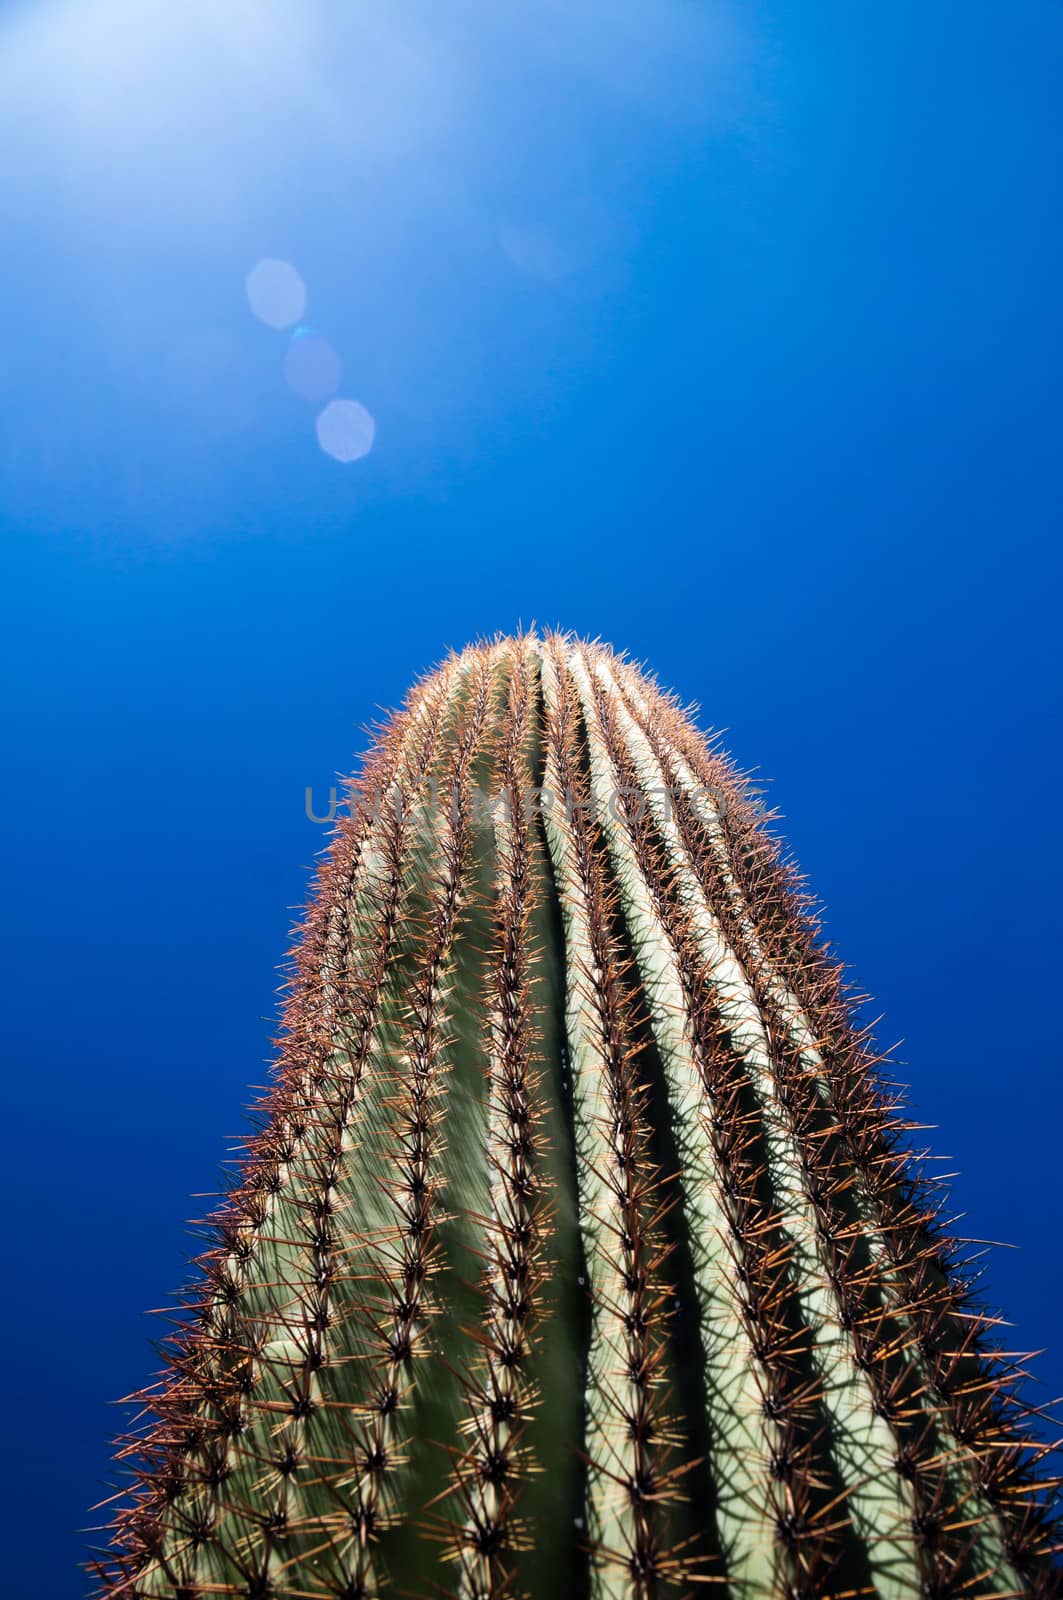 Saguaro with Bokahs by emattil